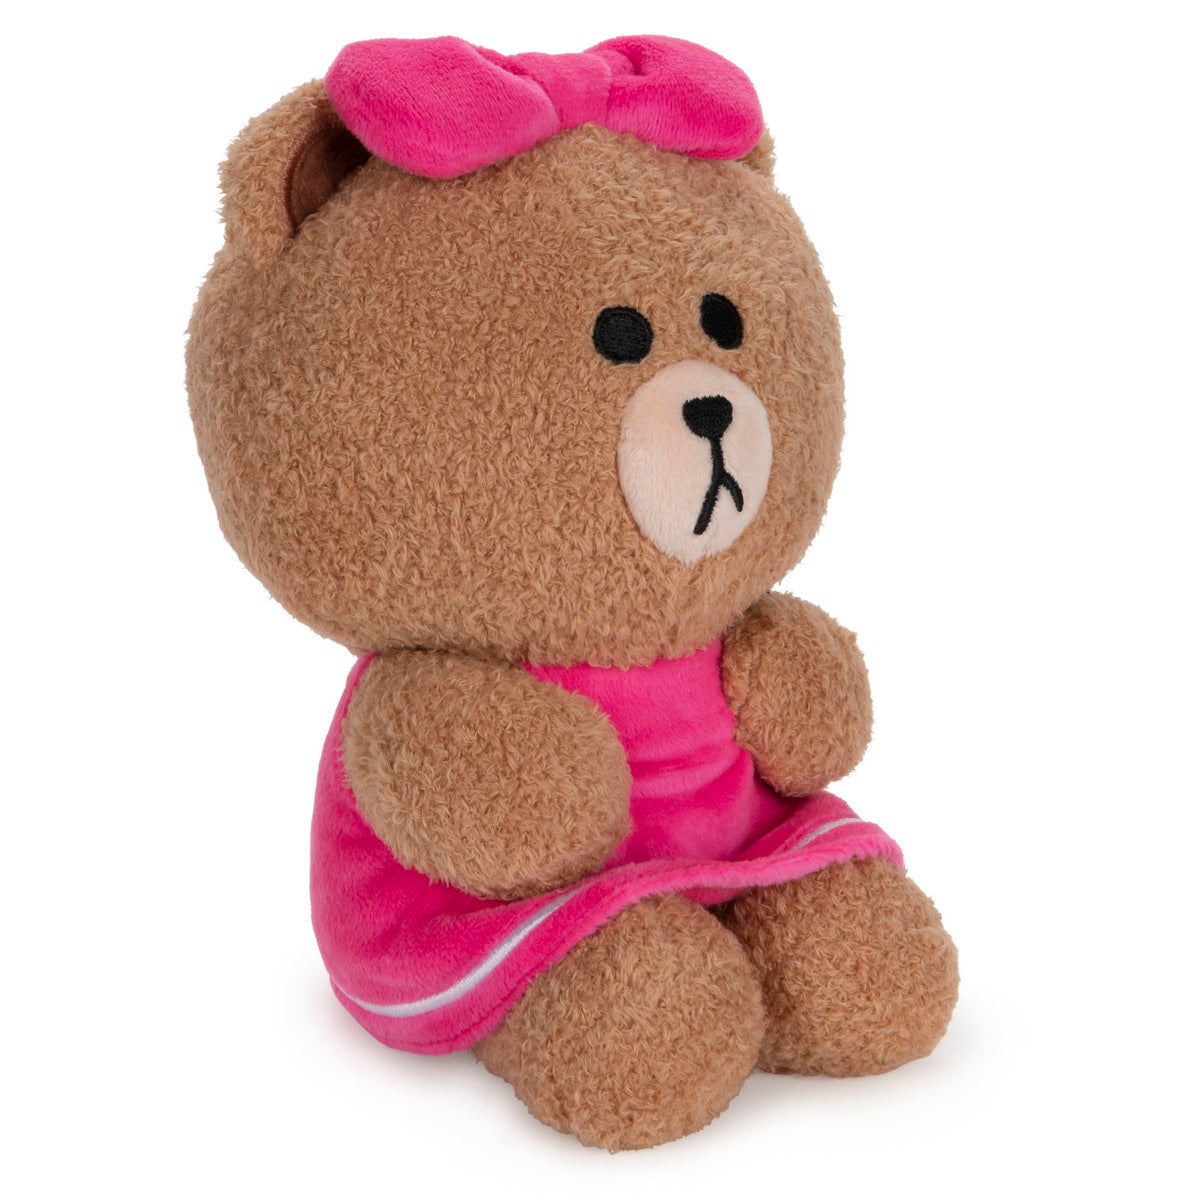 Baby Gund Plush Toy 20cm - Choco Bear